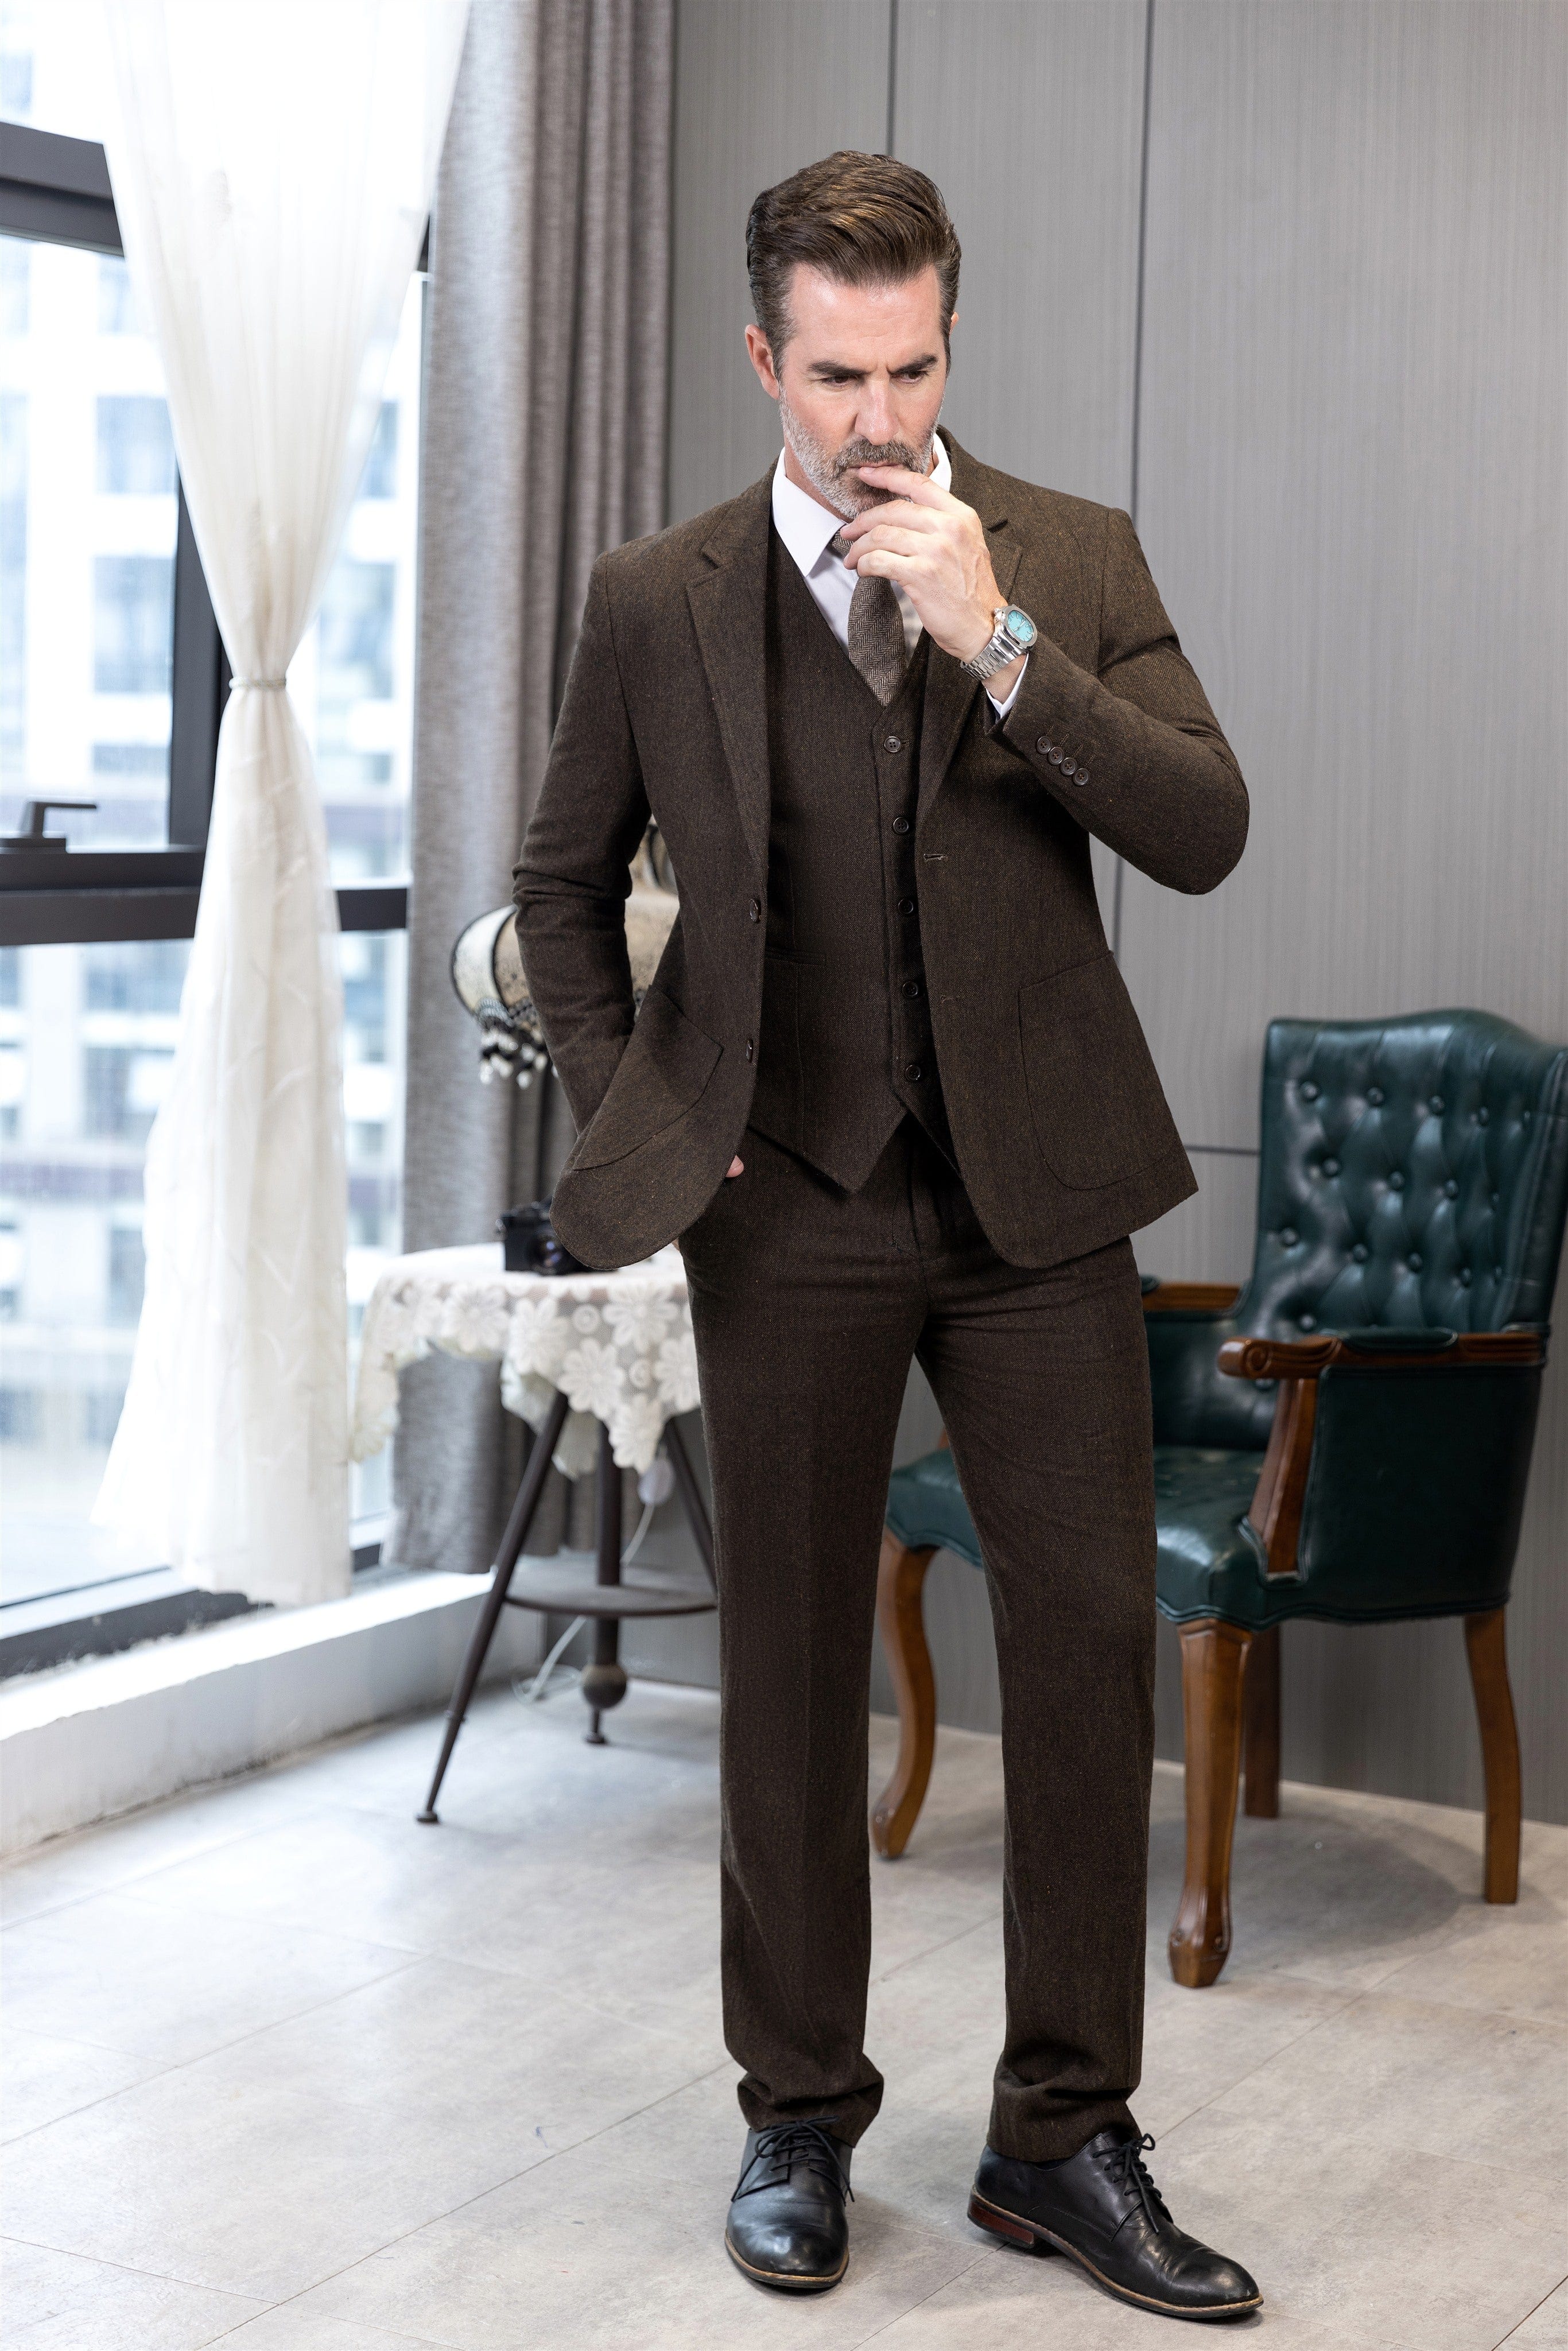 ceehuteey 3 Pieces Mens Suit Herringbone Business Flat Suit (Blazer+vest+Pants)